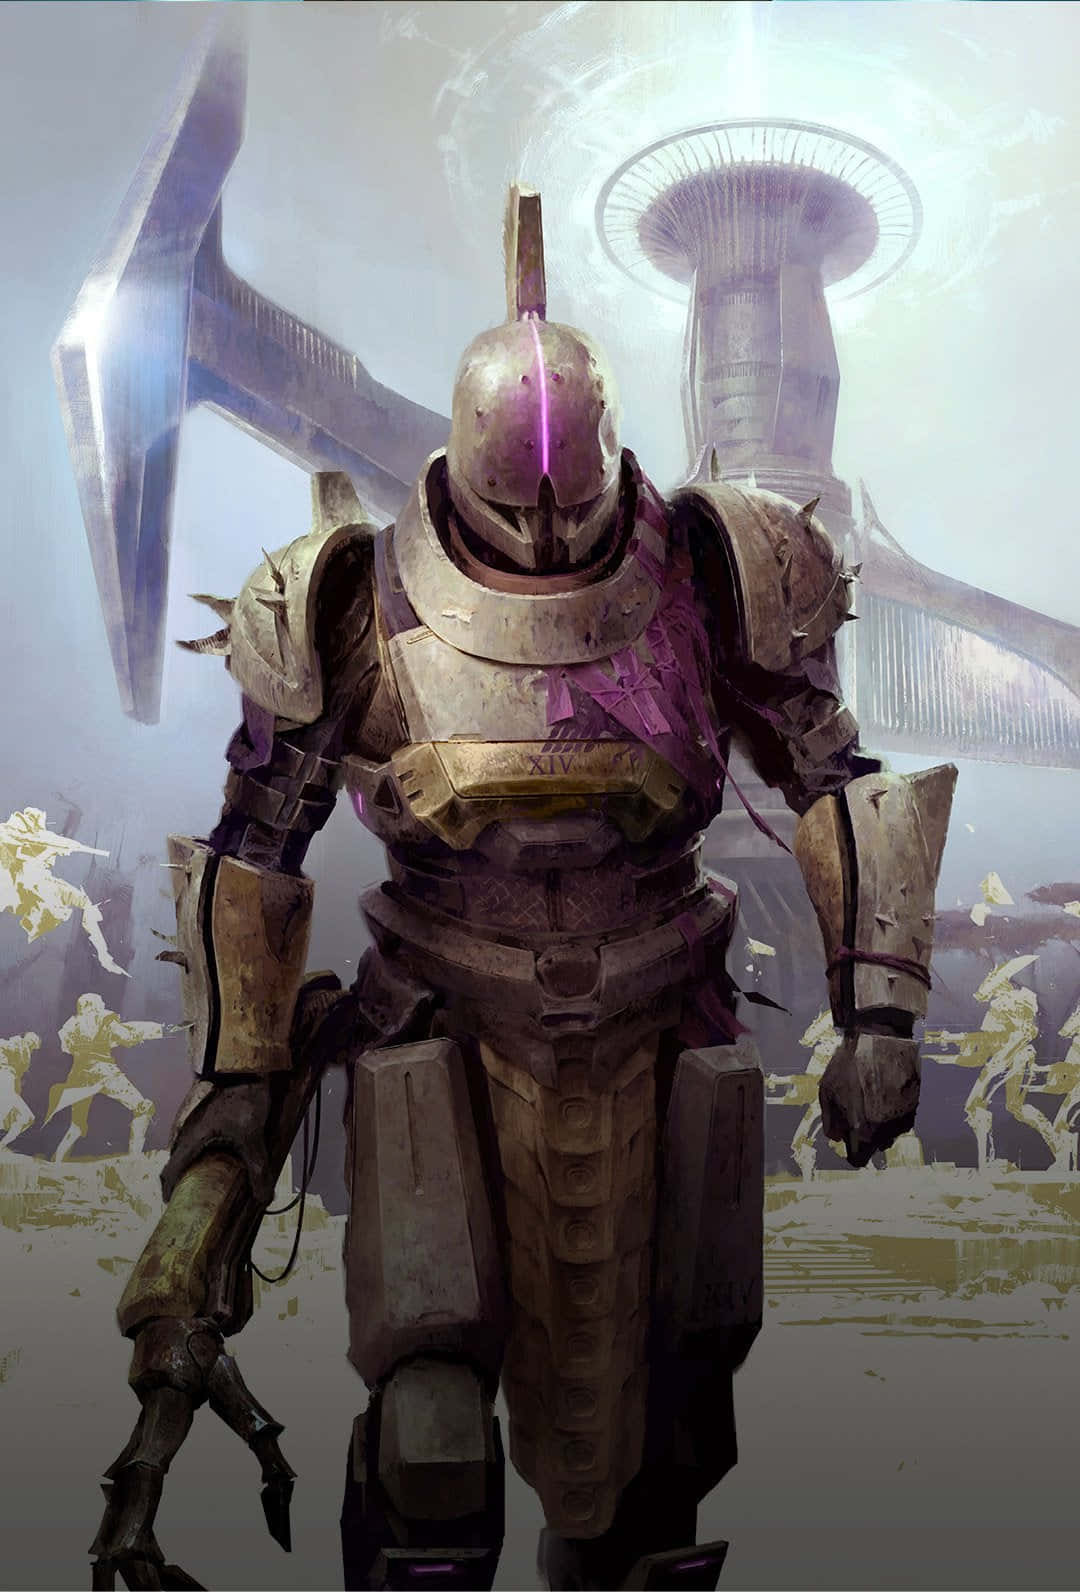 Saint-14, Titan Of The Last City | Destiny Game Universe Wallpaper